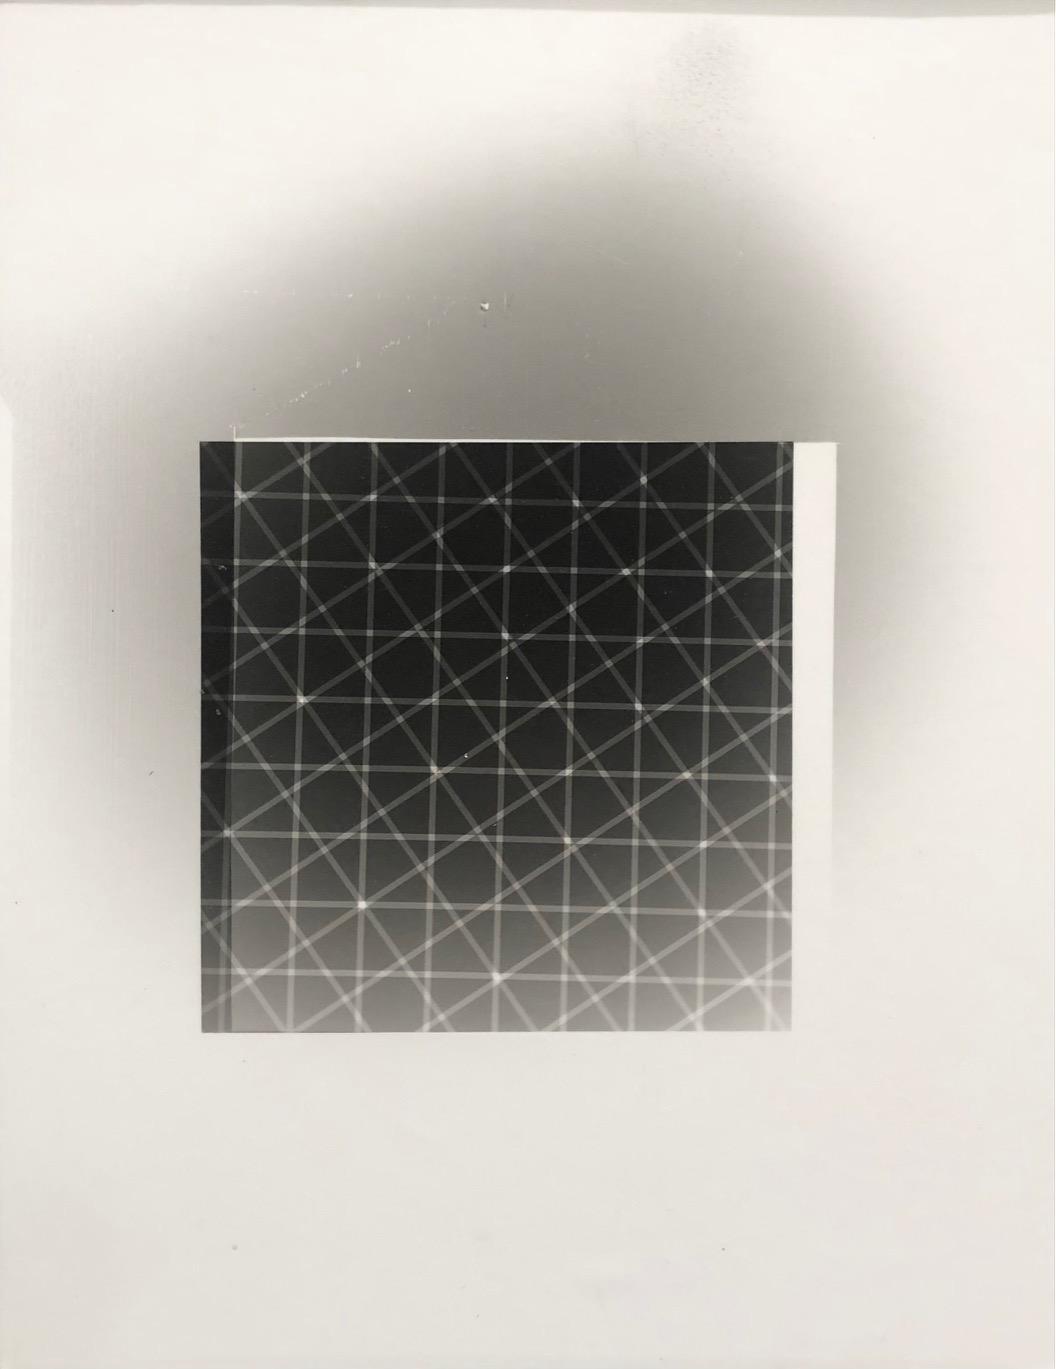 Juan Fernandez, Window (Negative), 2021, Laminated silver gelatin print mounted on masonite, 14” x 11” x 1”